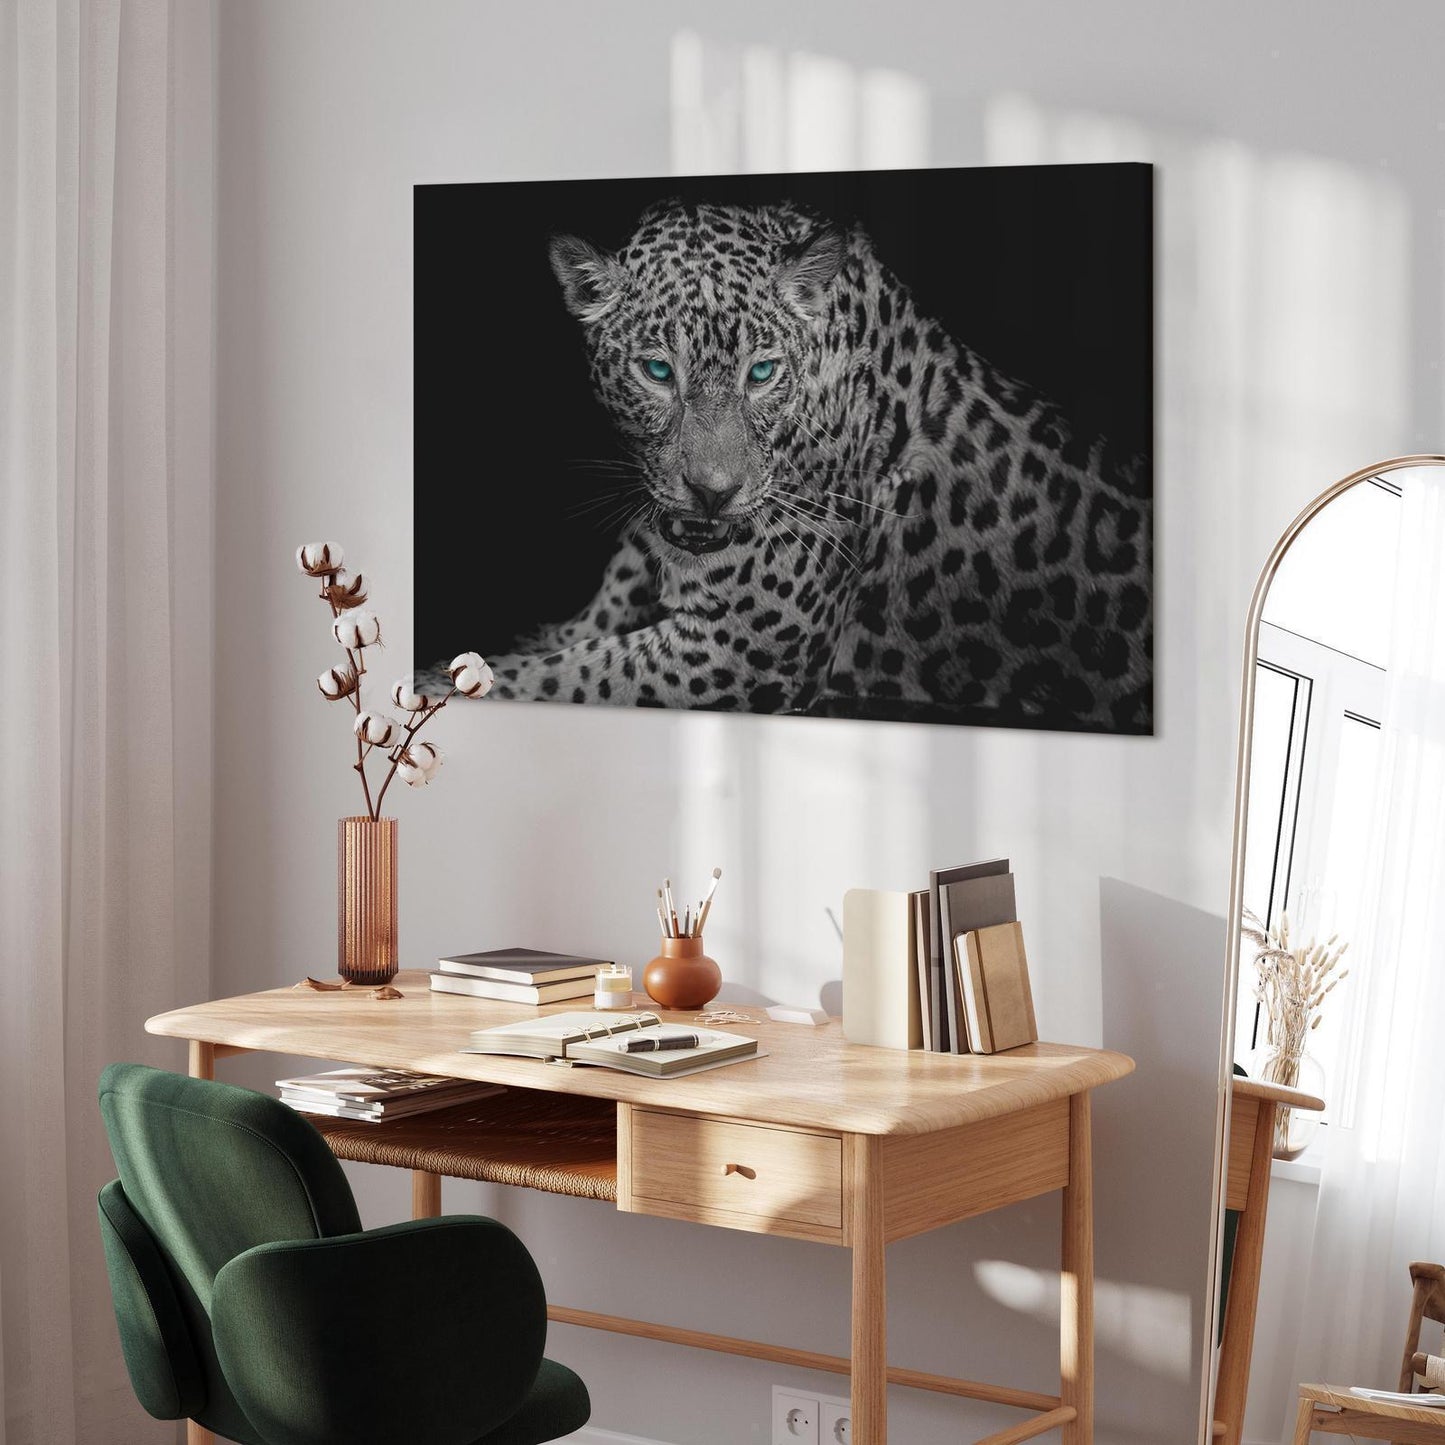 Gemälde - Leopardenporträt (1 Teil) Breit